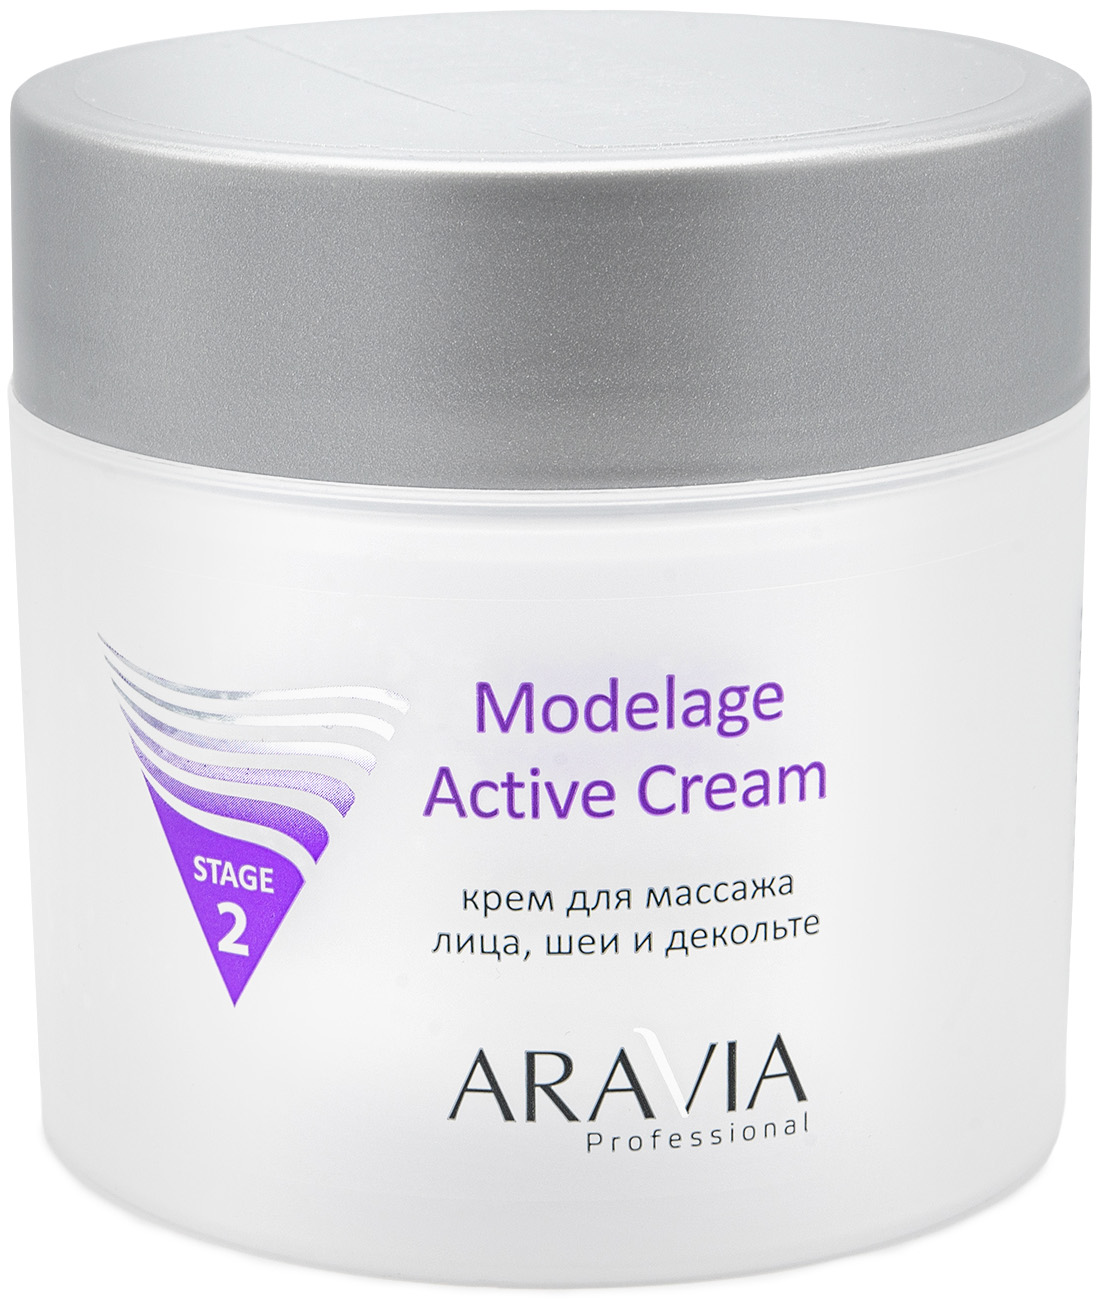 Aravia Professional Крем для массажа Modelage Active Cream, 